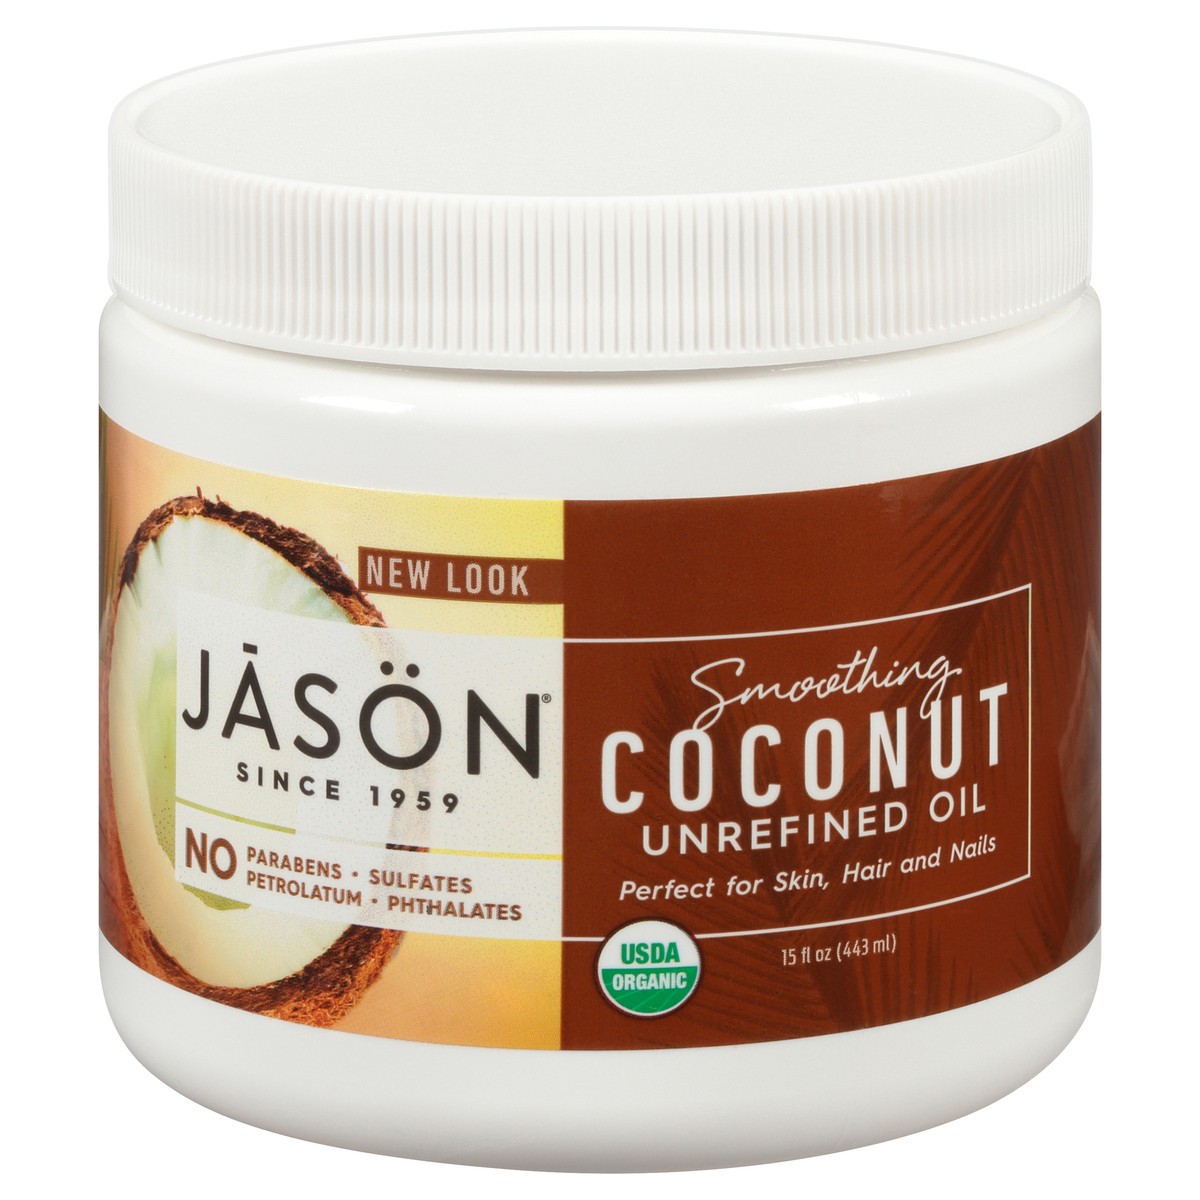 slide 2 of 10, JASON Smoothing Coconut Unrefined Oil 15 fl. oz. Jar, 15 fl oz